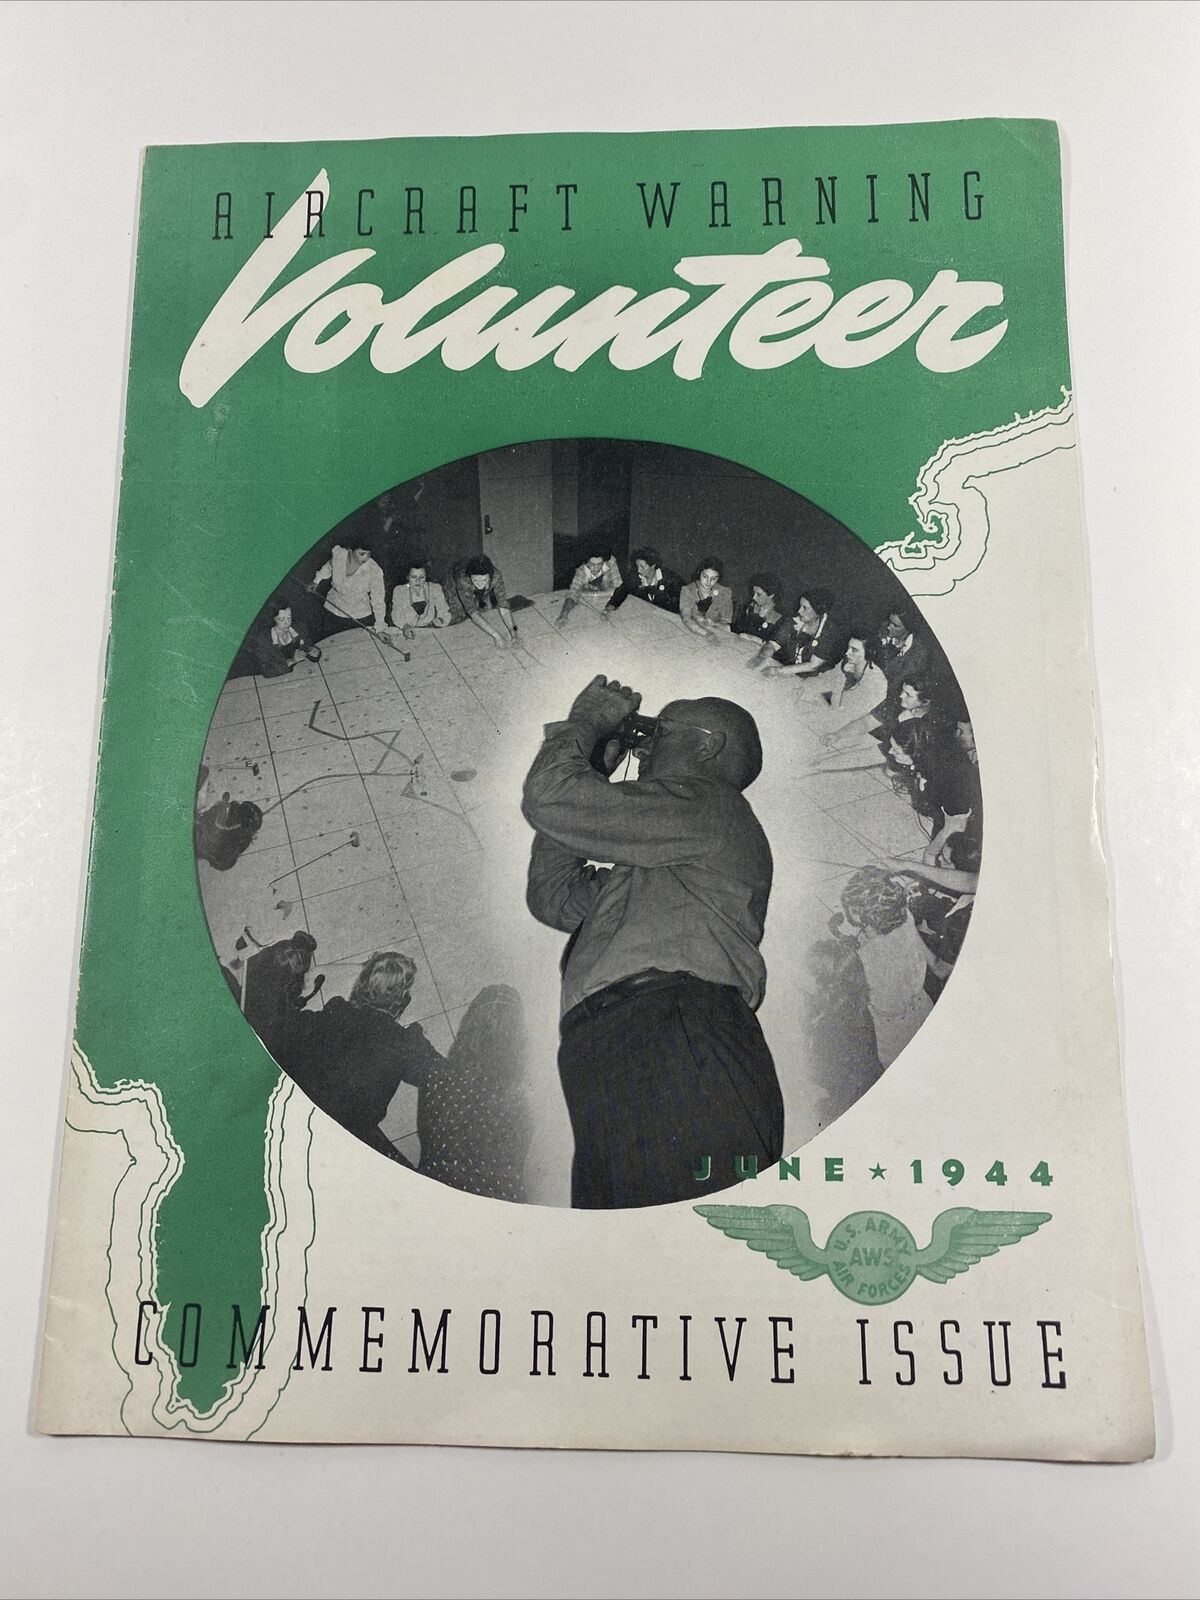 Aircraft Warning Volunteer magazine June 1944 Commemorative Issue Rare HTF